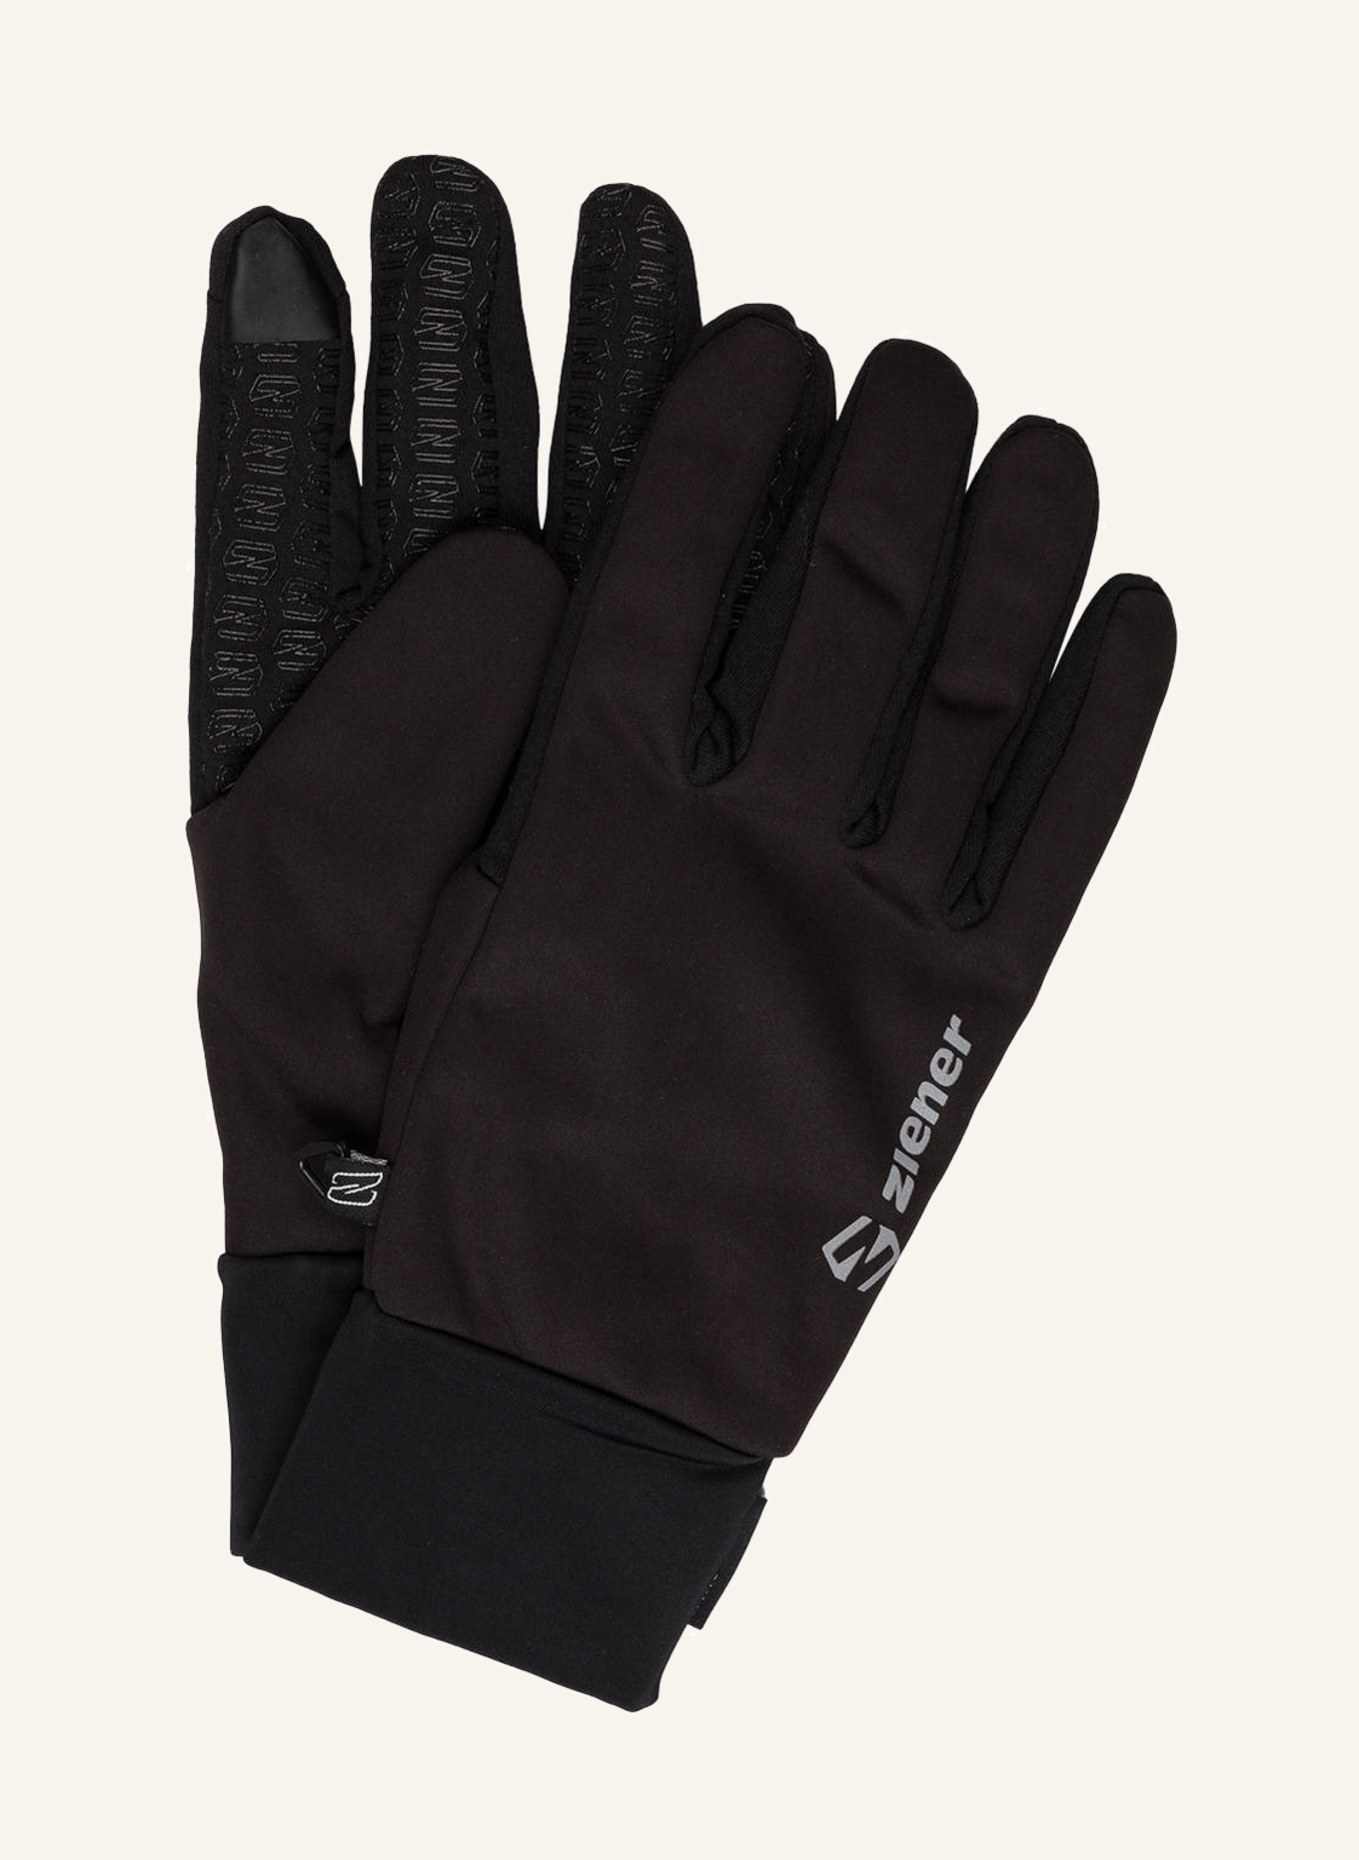 ziener Multisport-Handschuhe IVIDURO TOUCH in schwarz